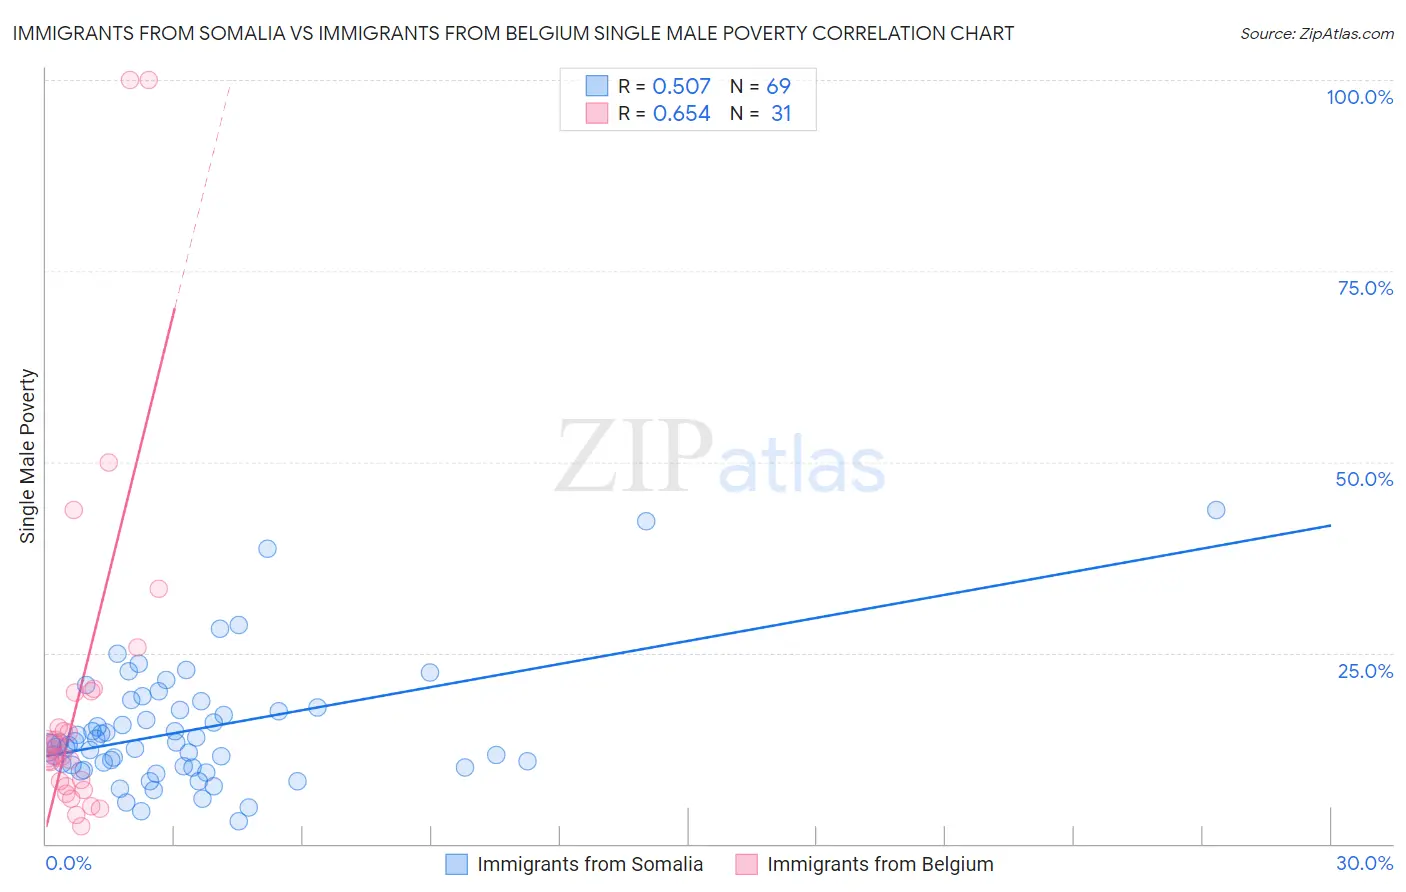 Immigrants from Somalia vs Immigrants from Belgium Single Male Poverty